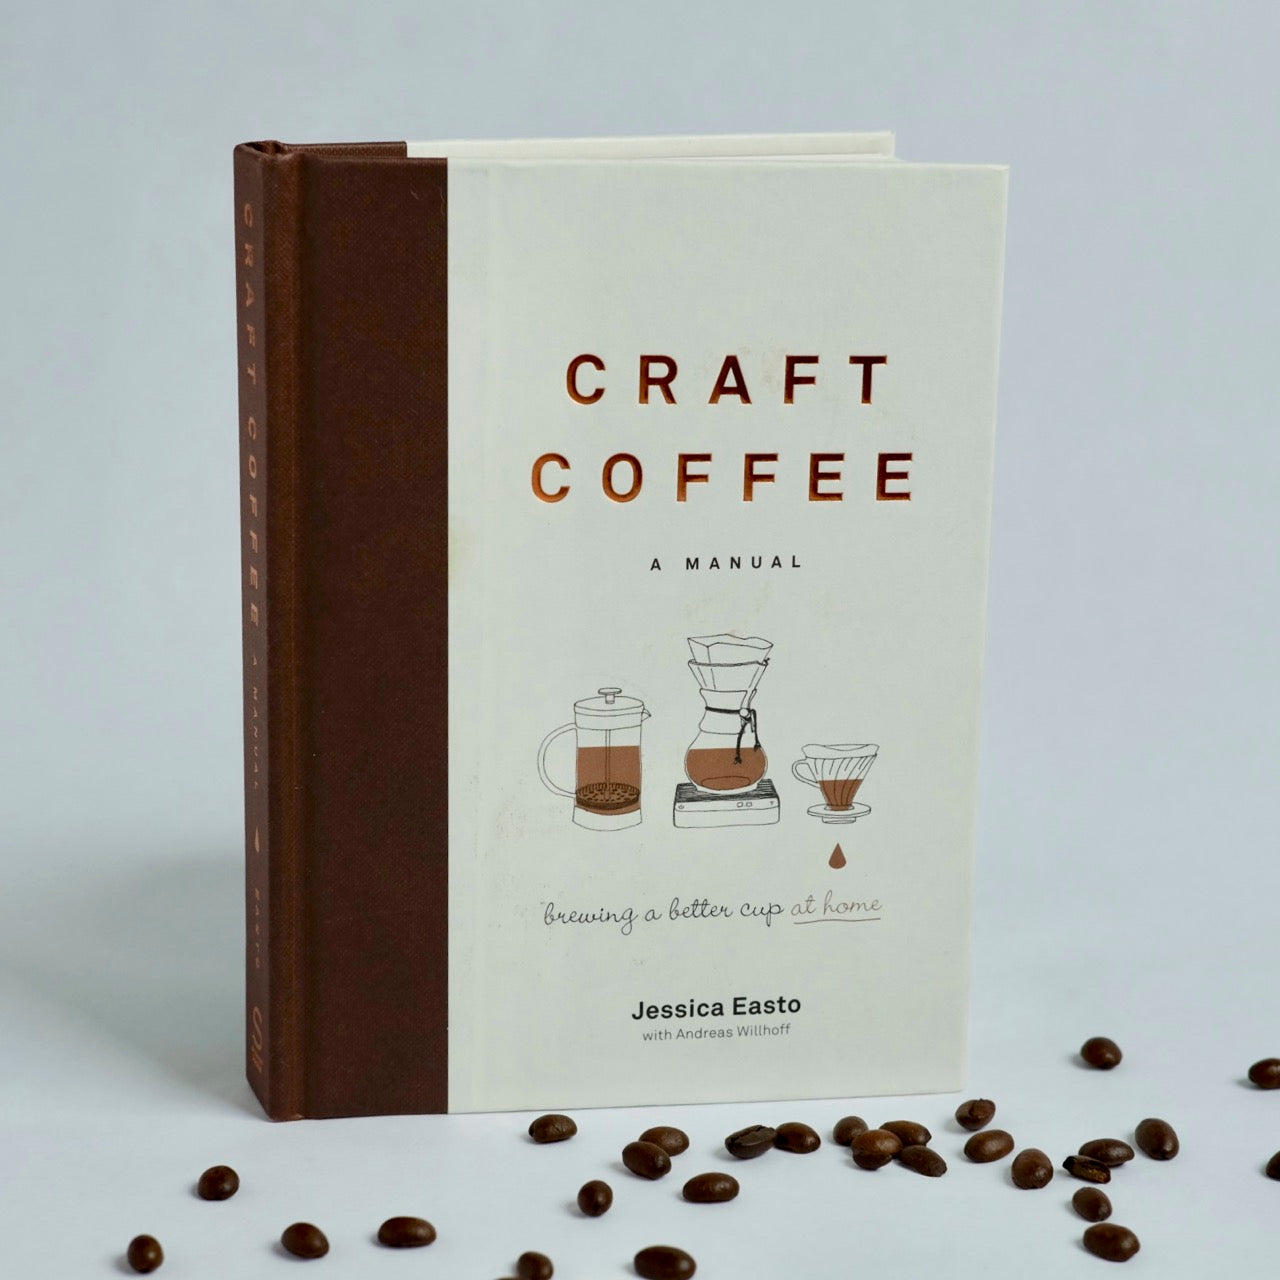 Crafts Coffee